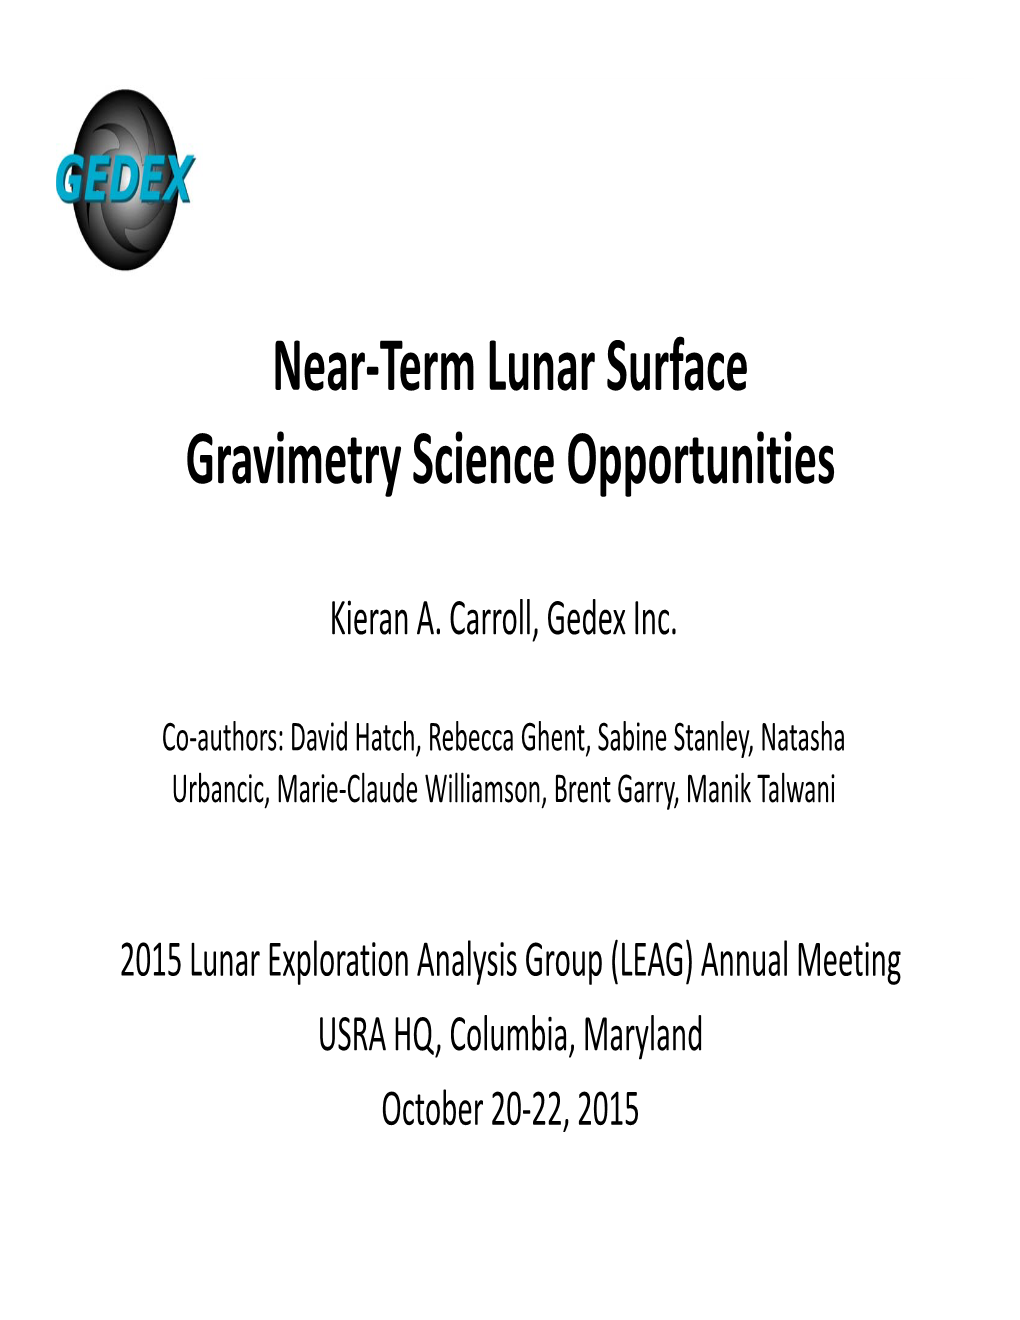 Near-Term Lunar Surface Gravimetry Science Opportunities